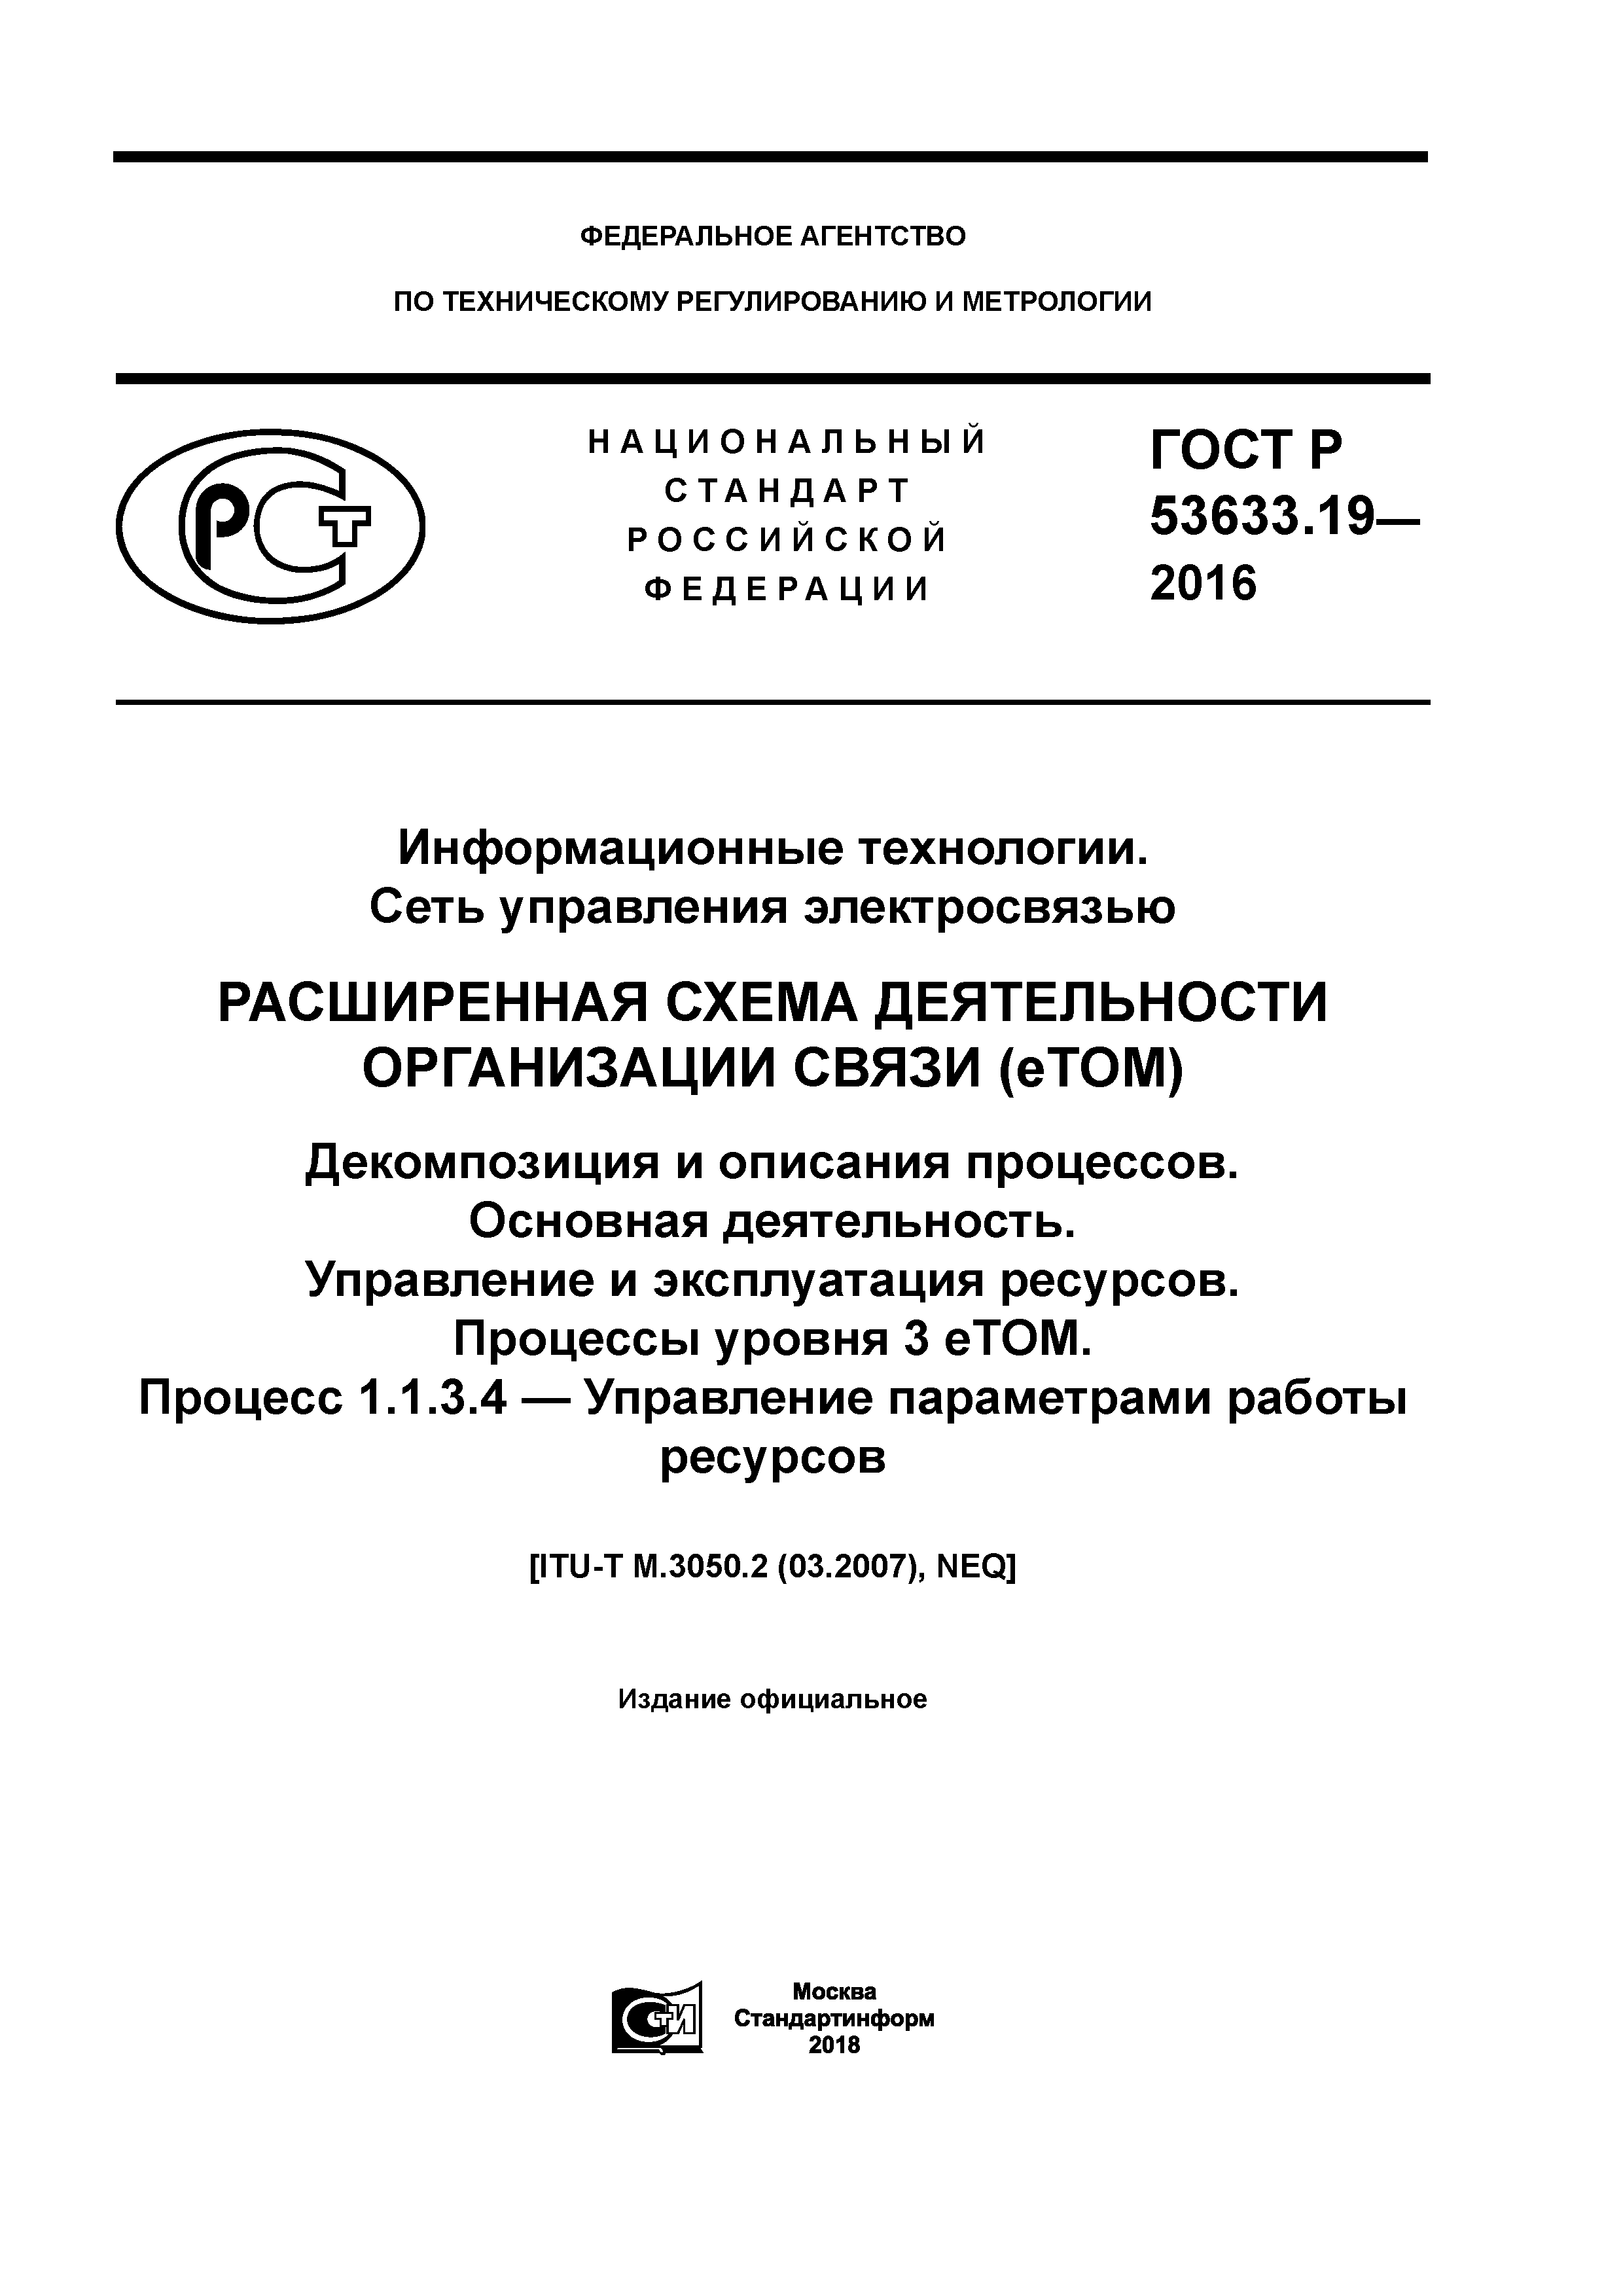 ГОСТ Р 53633.19-2016